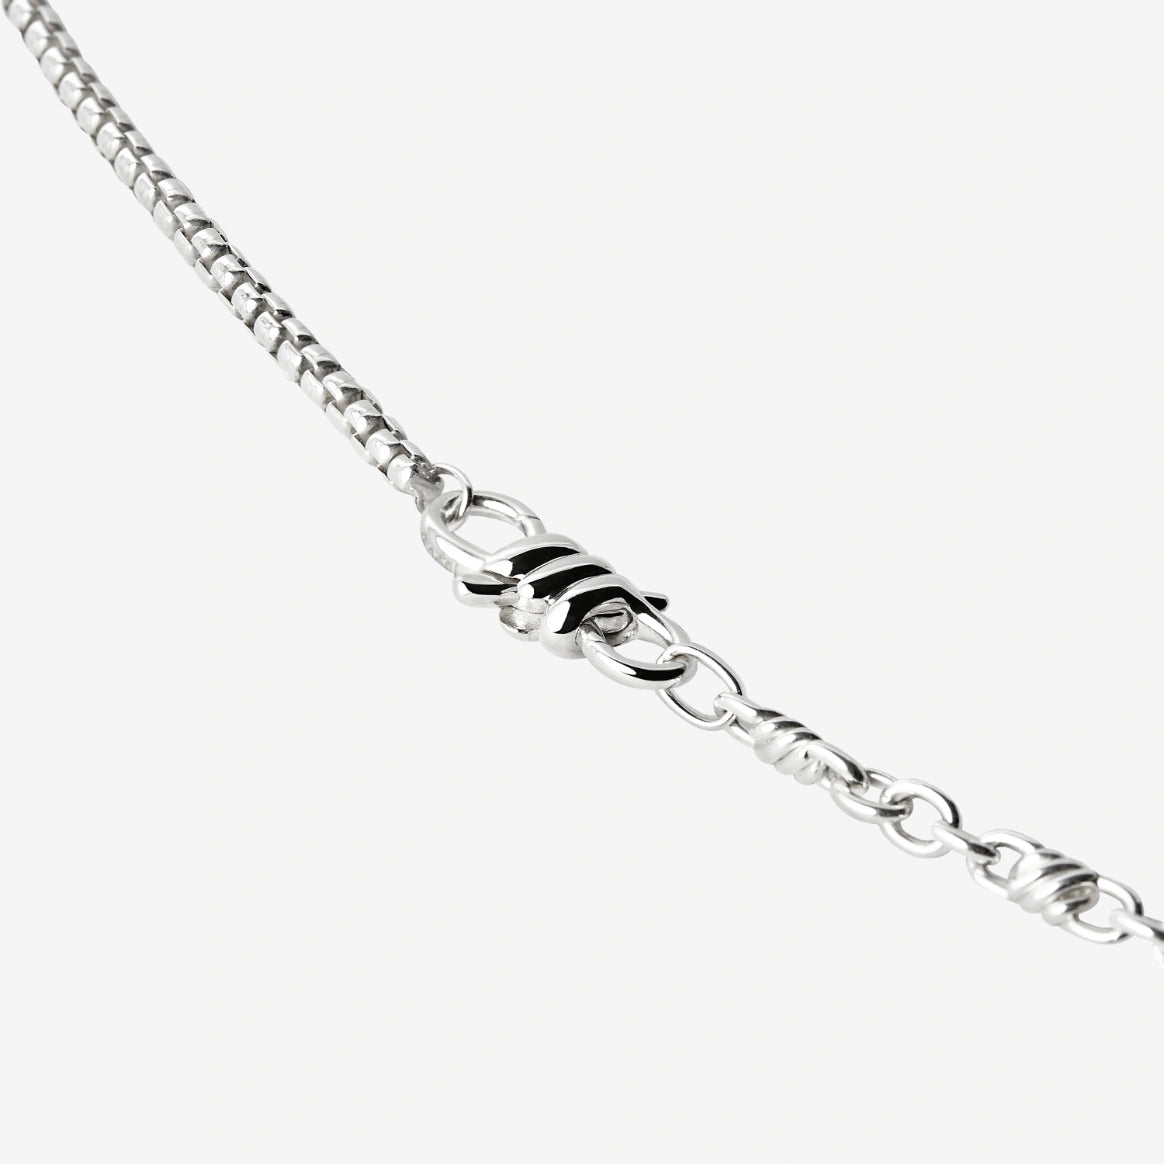 DoDo Necklace Nodo Silver with Knot Clasp 75cm - Orsini Jewellers